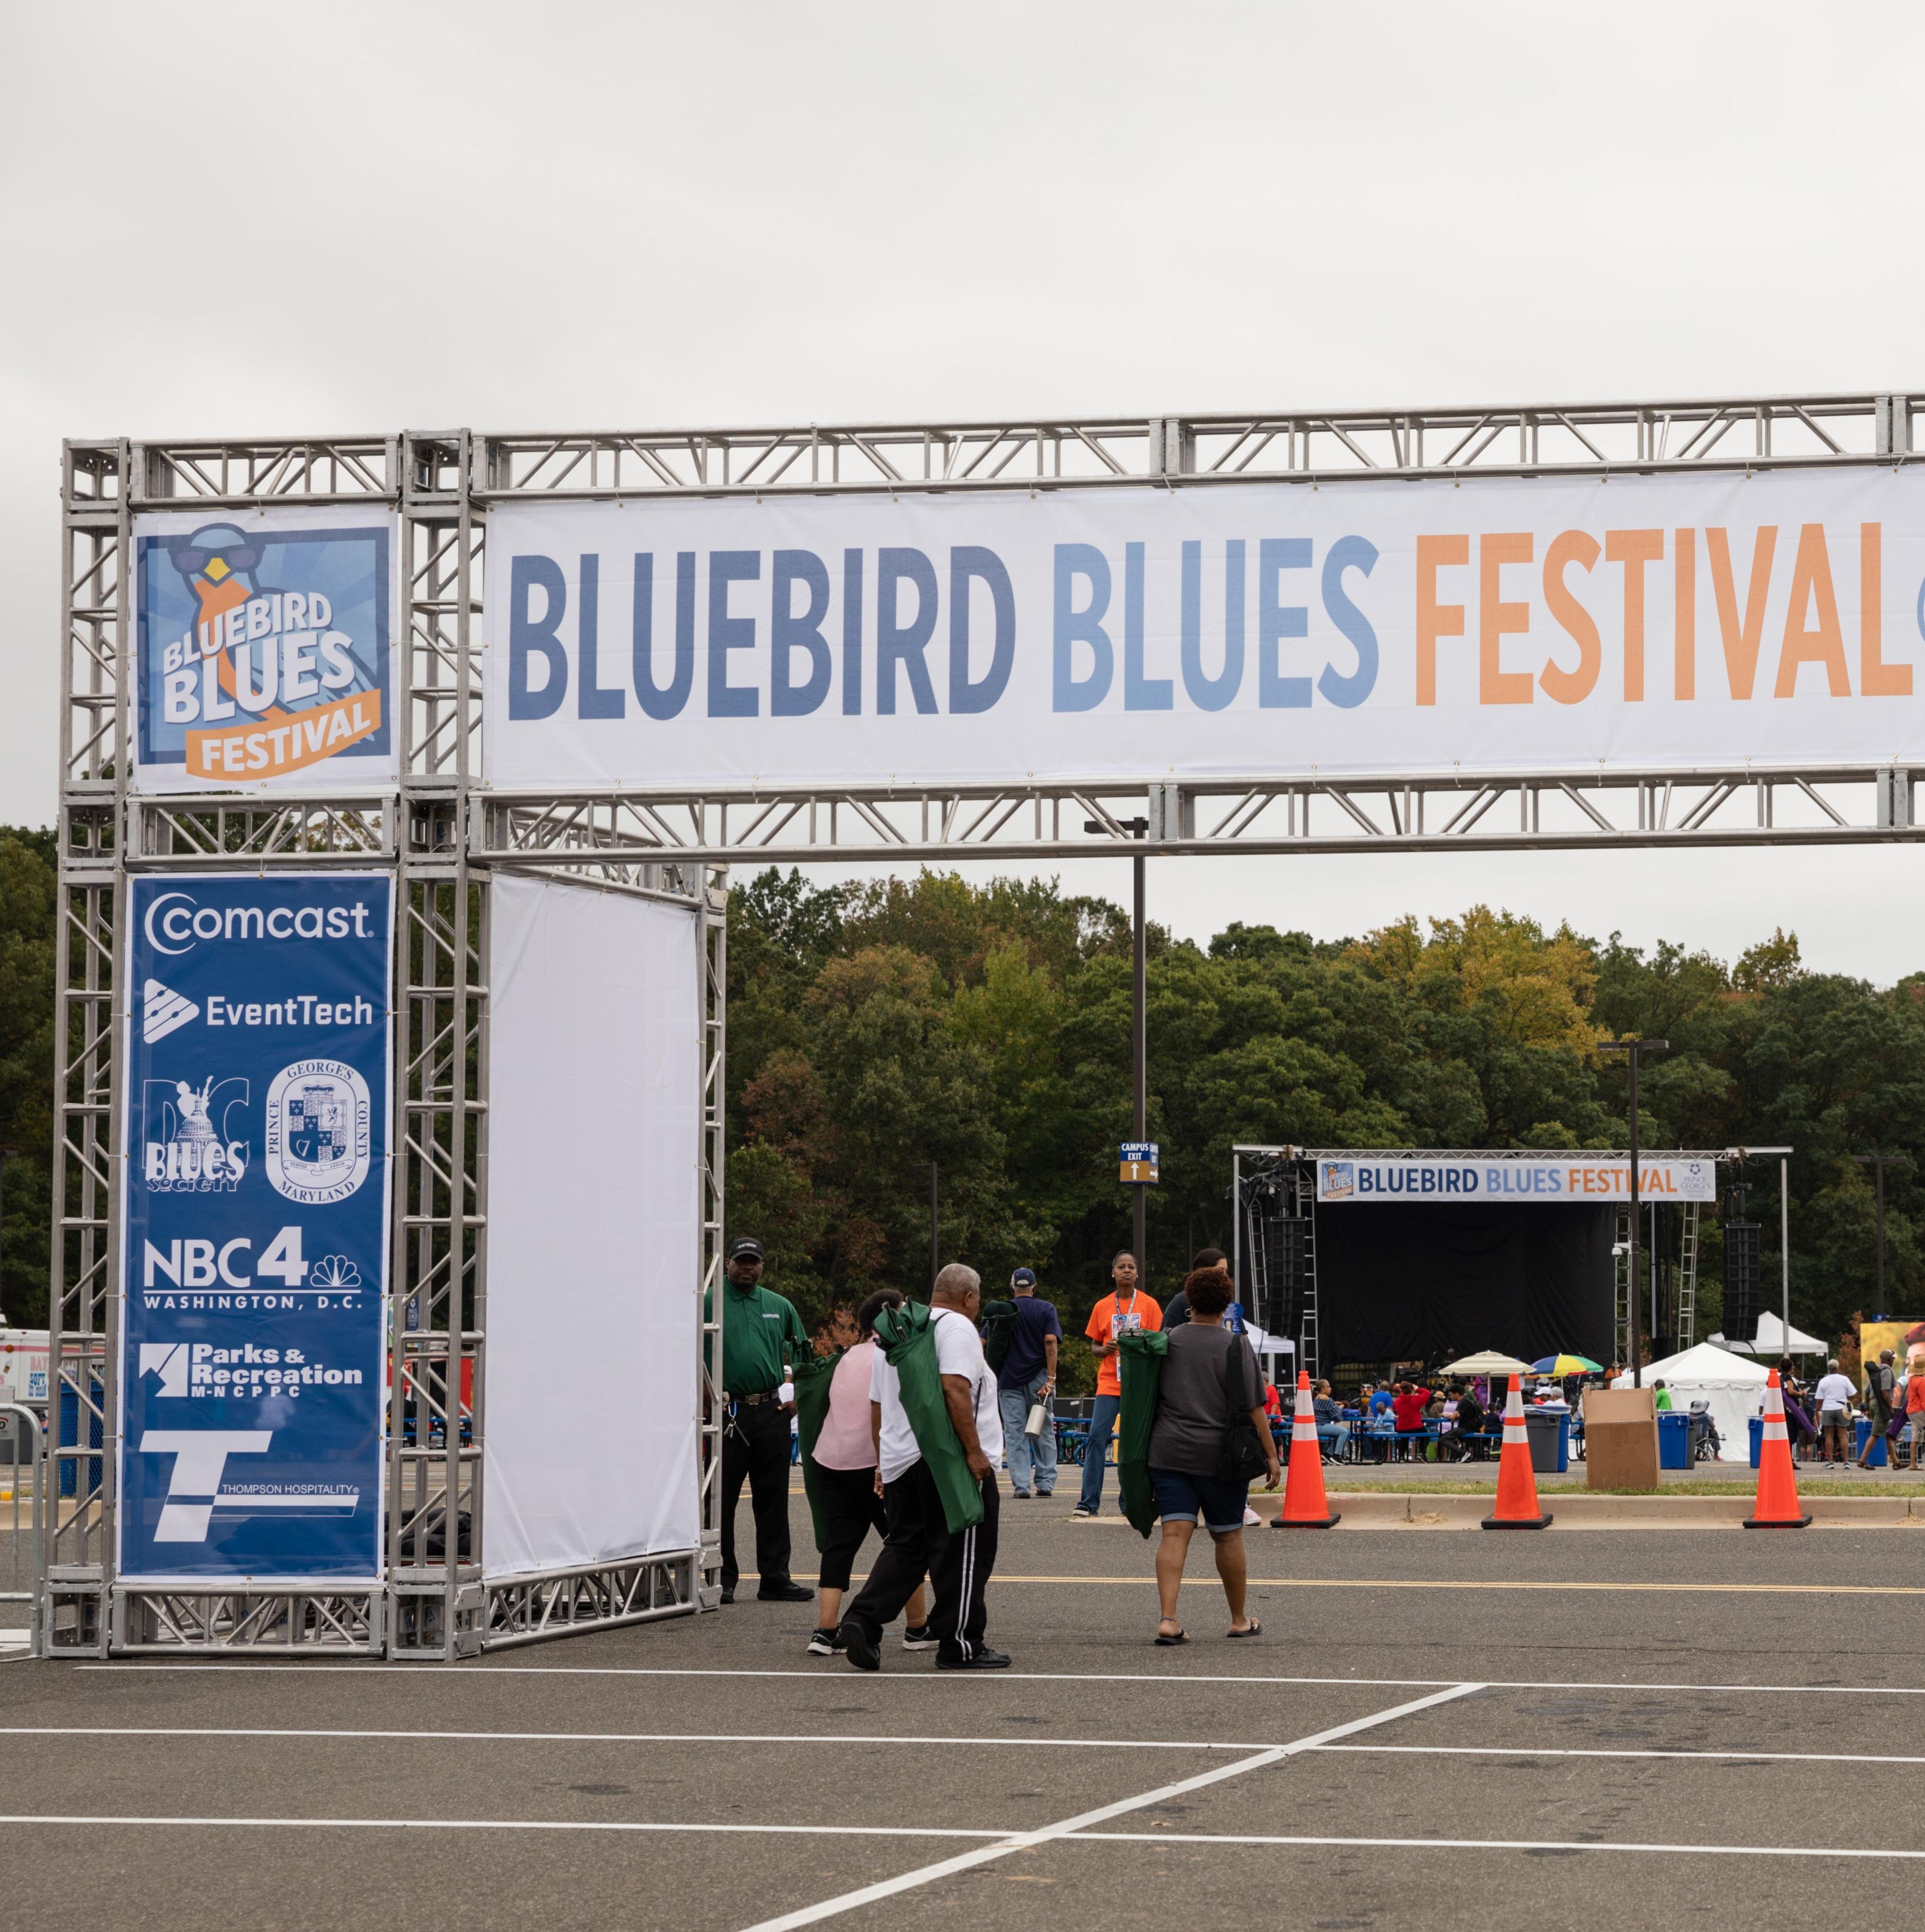  Bluebird Blues Festival